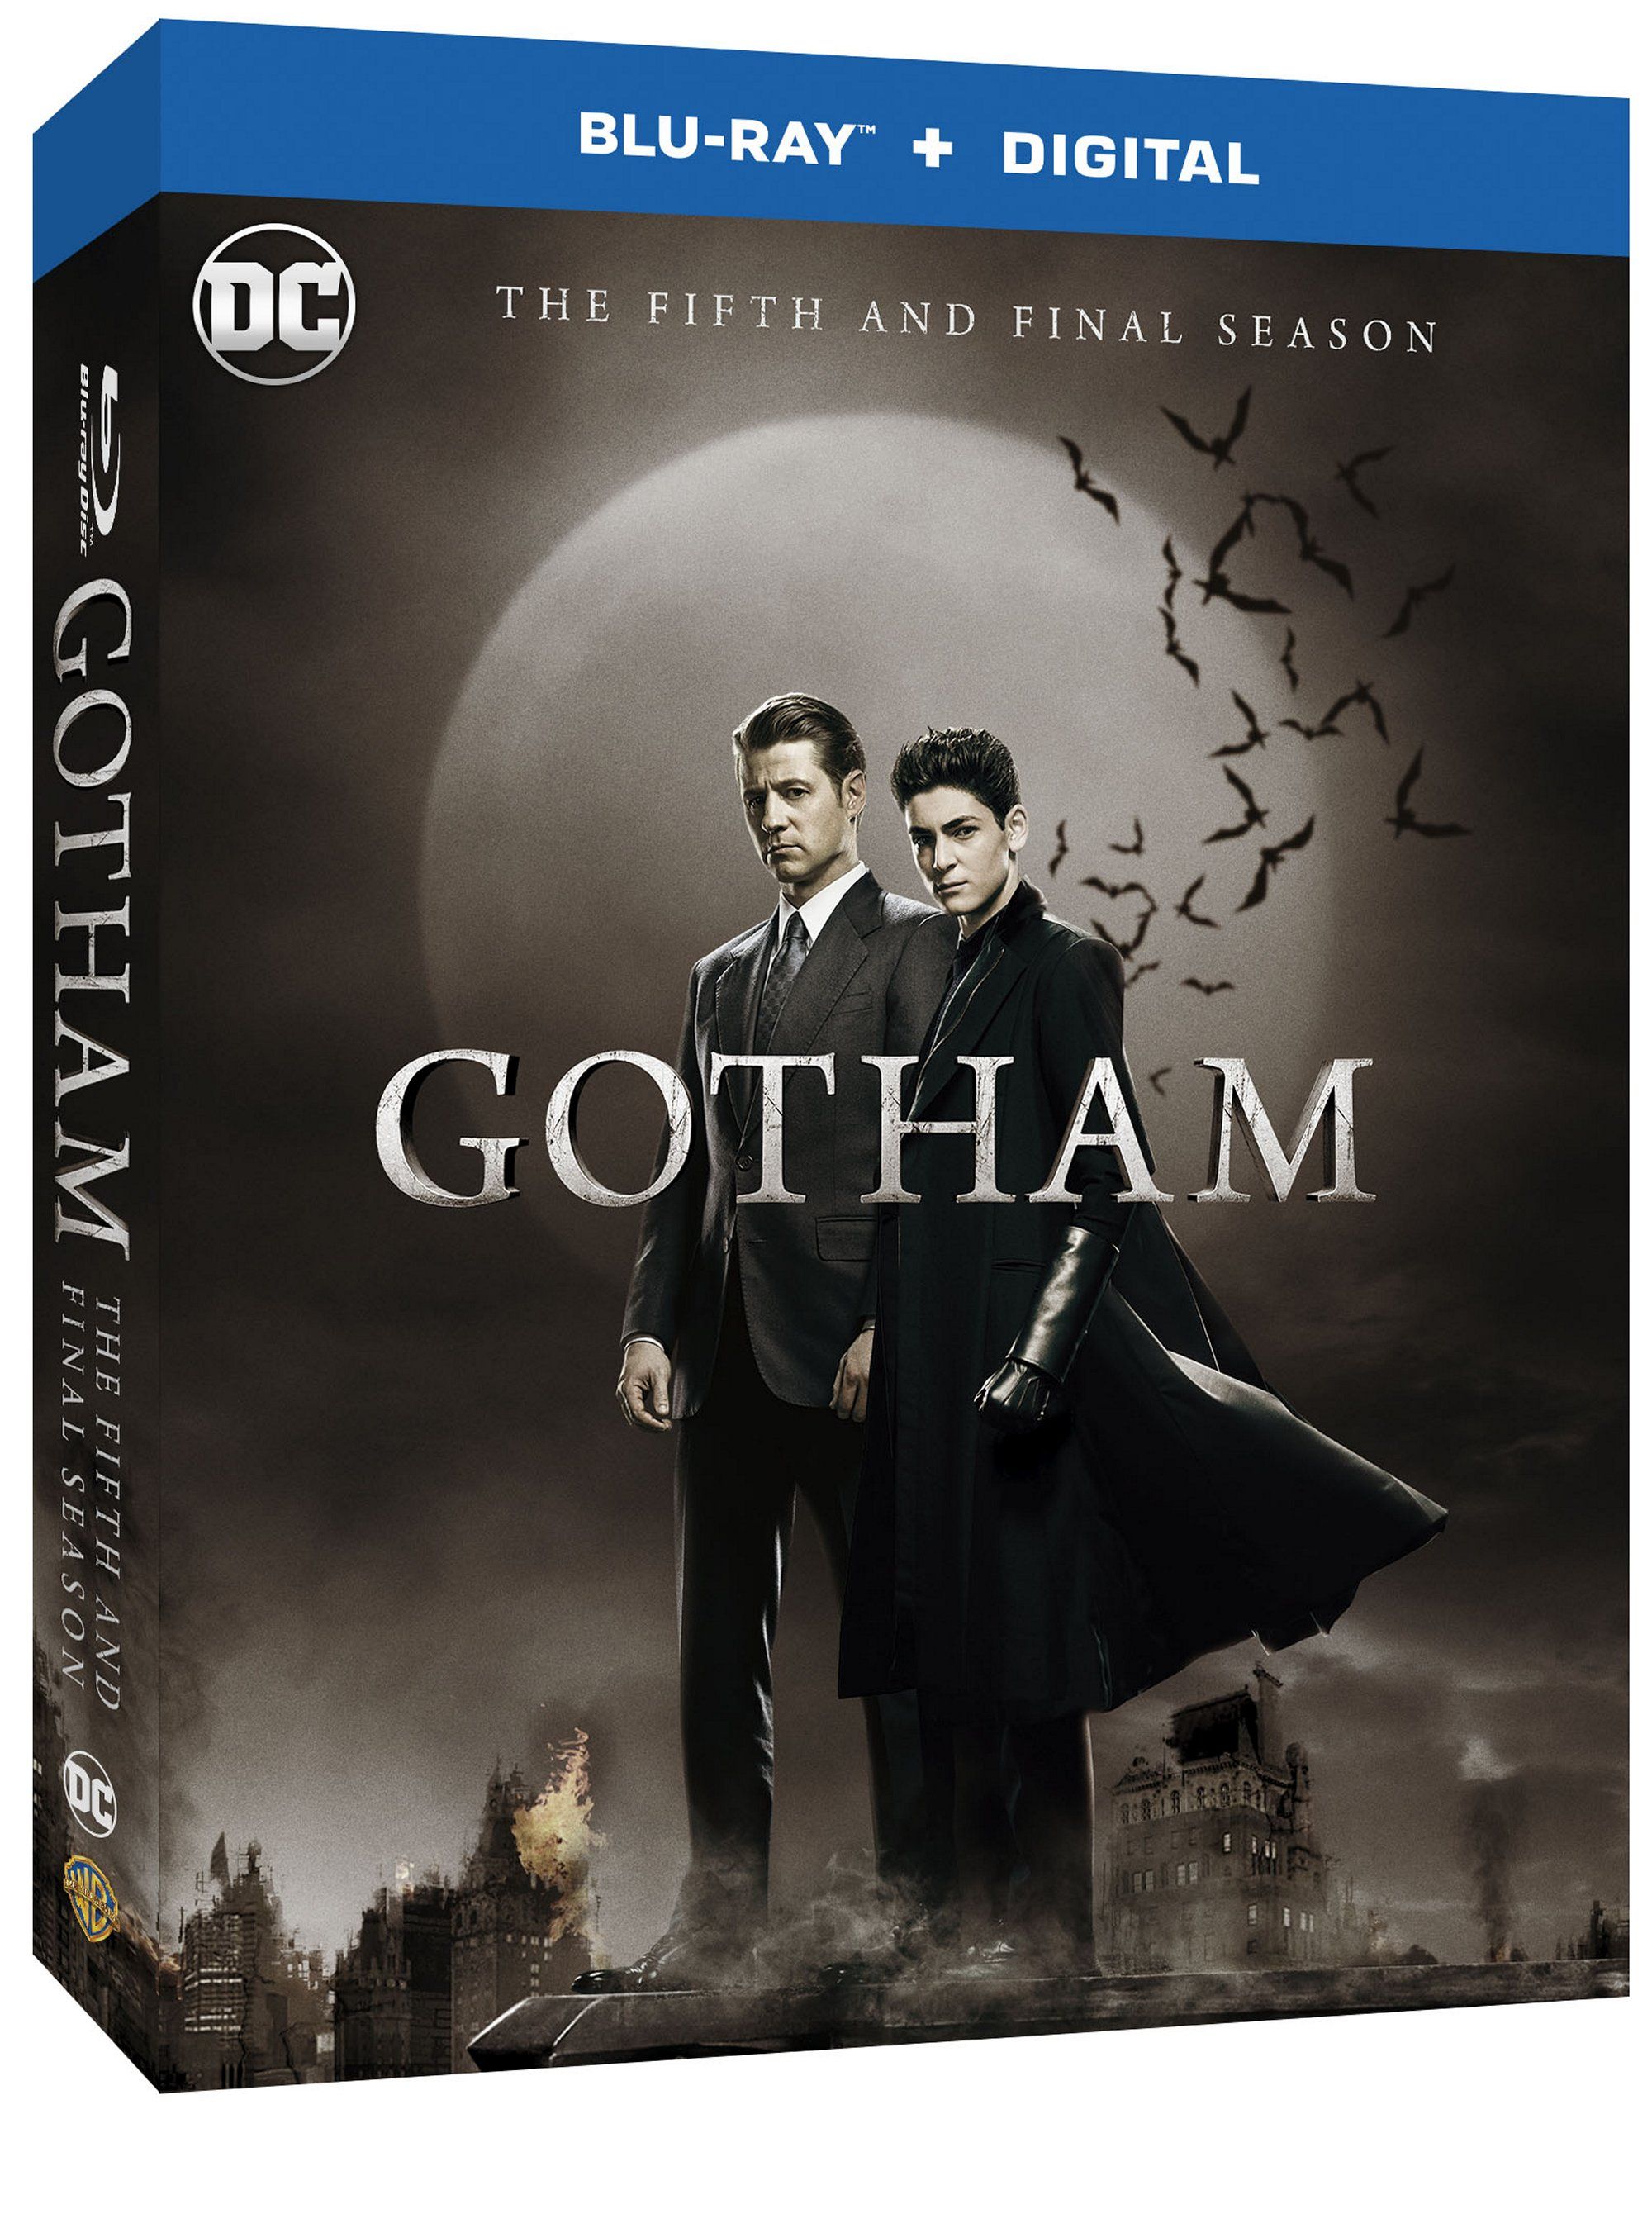 Gotham Season 5 blu ray box